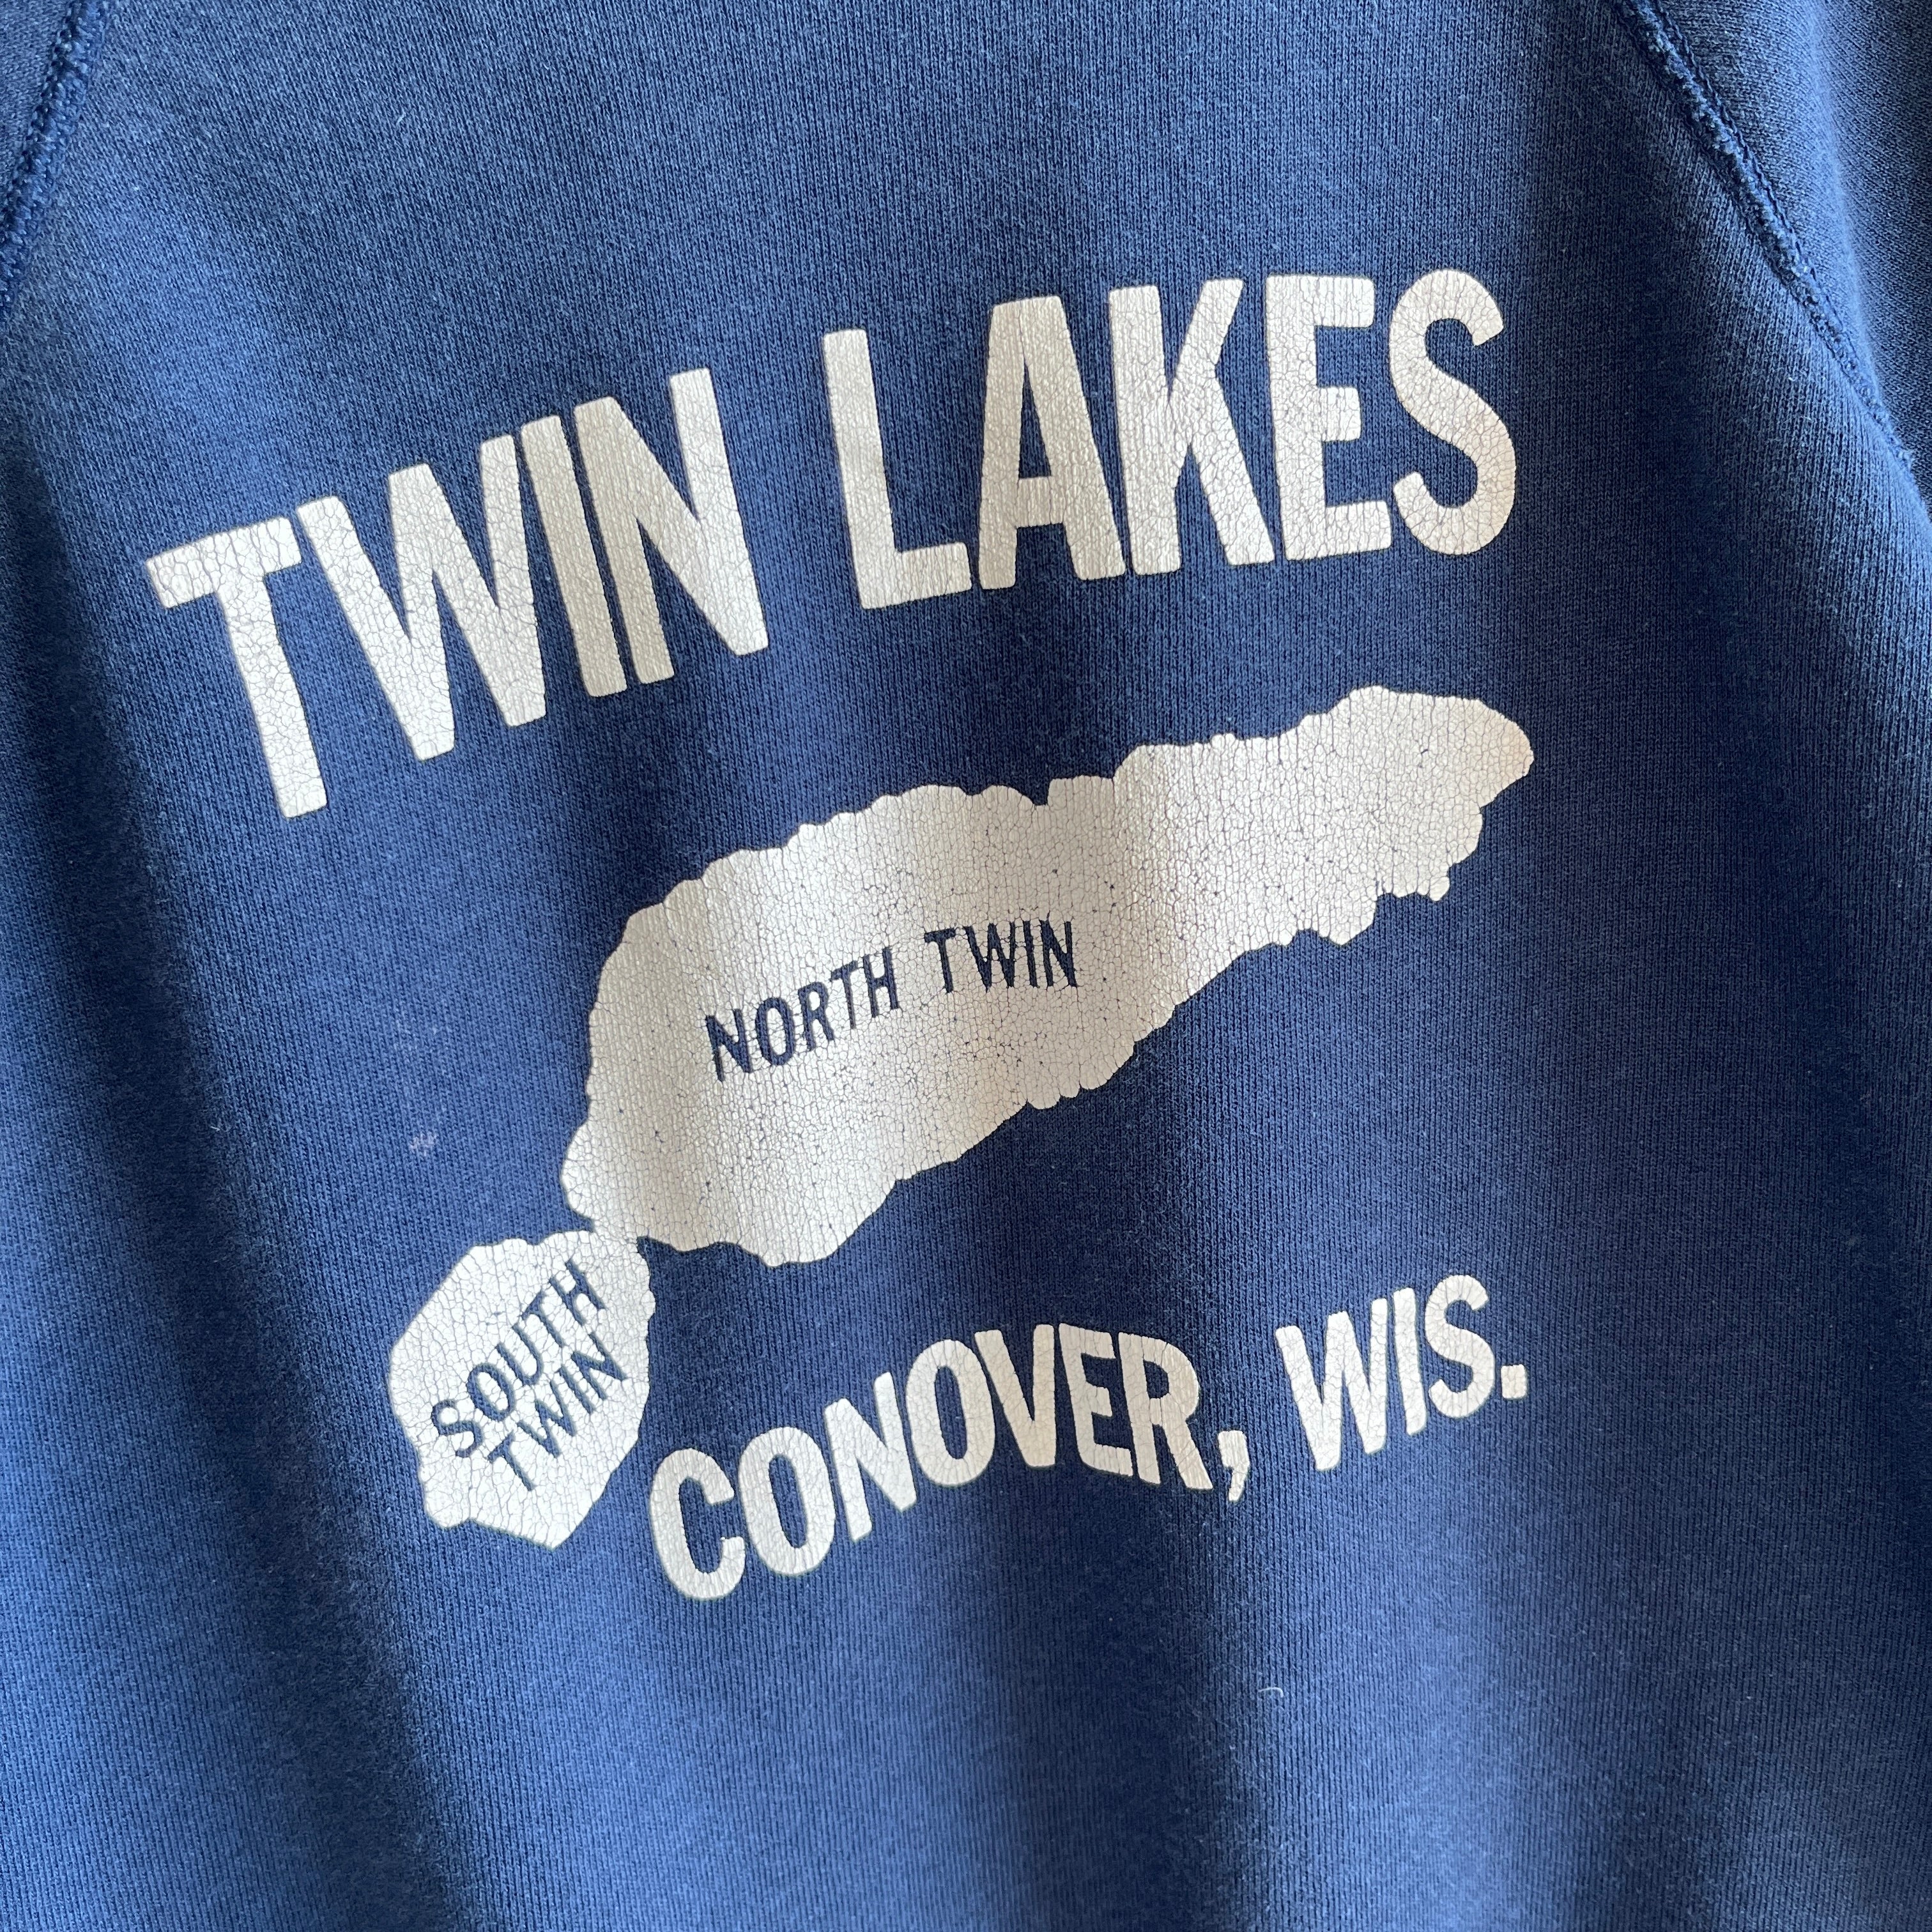 1980s (Early) Twin Lakes Conover, Wisconsin Sweatshirt